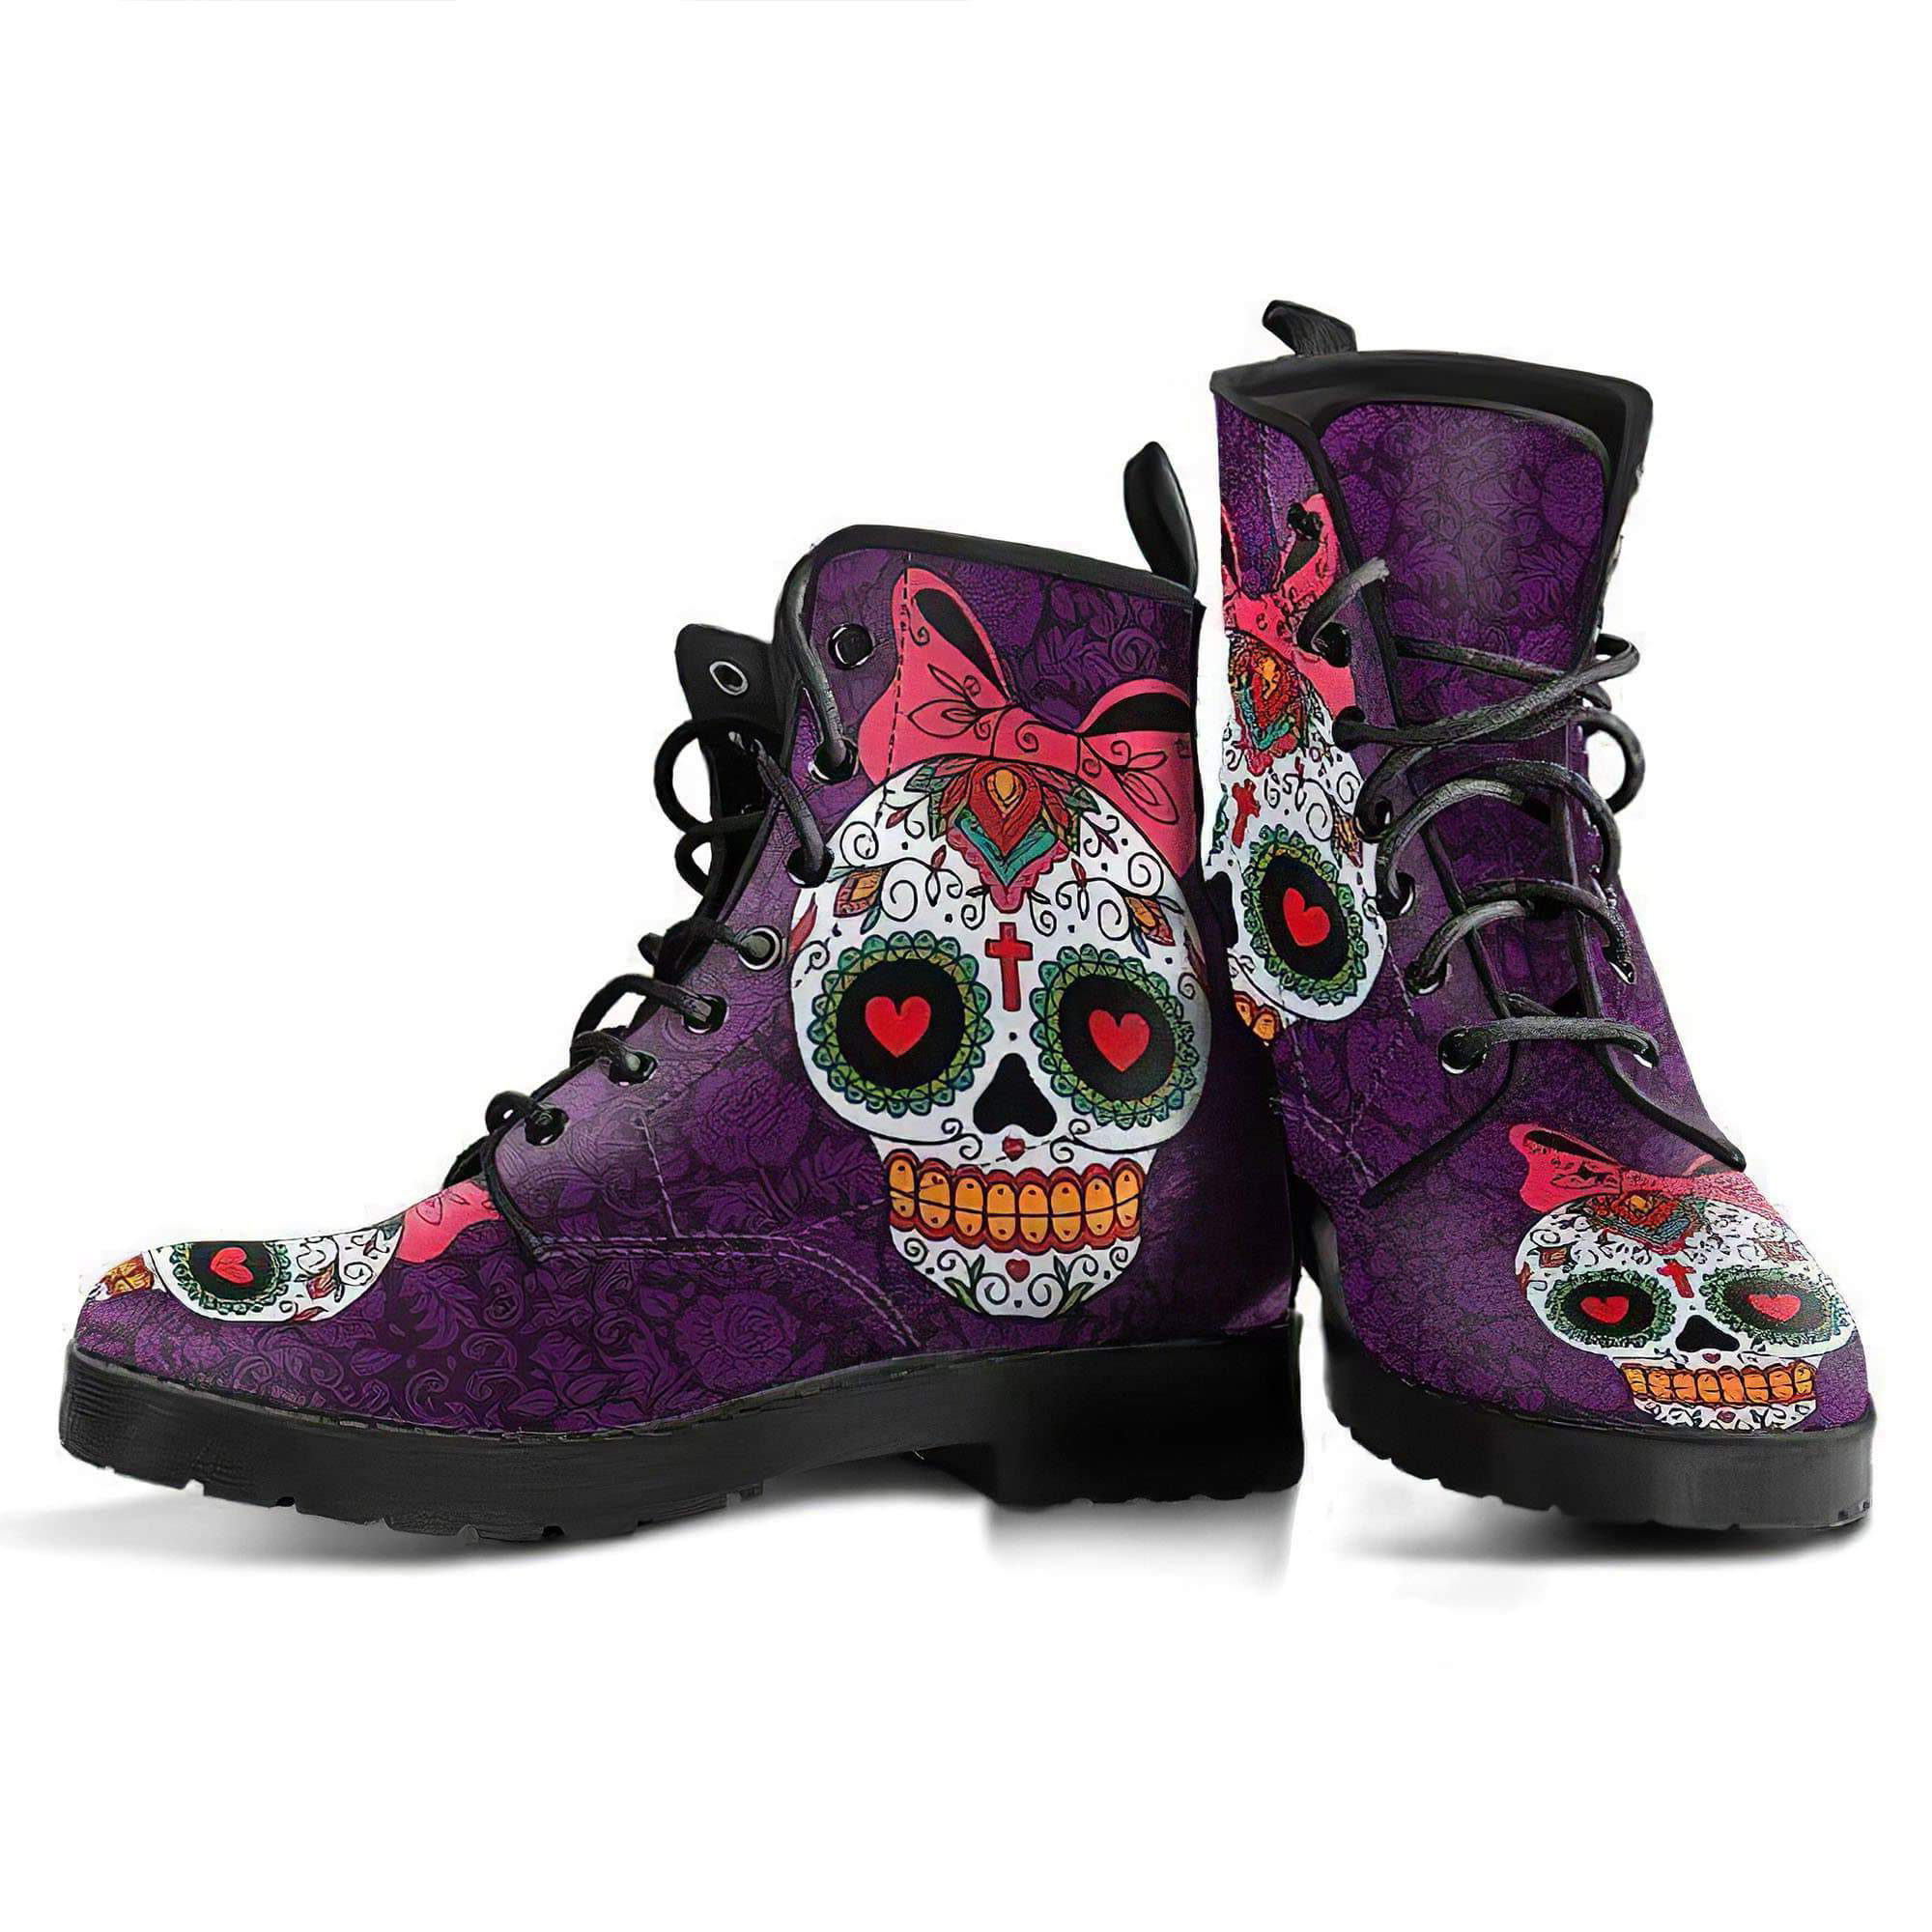 sugar-skull-women-s-boots-vegan-friendly-leather-women-s-leather-boots-12051954794557.jpg